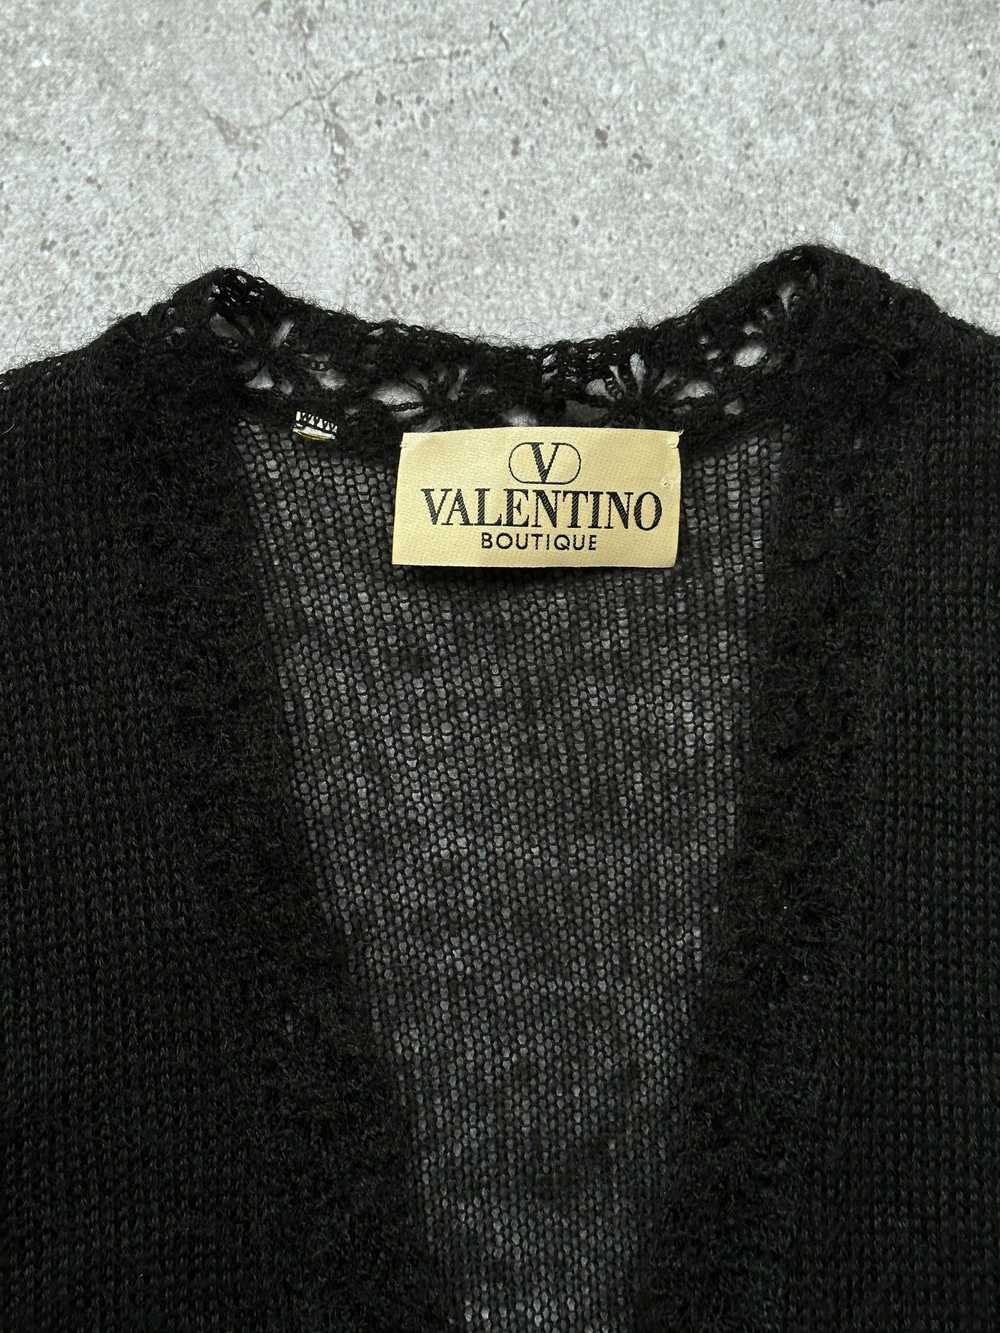 Valentino Valentino Boutique Knit Cardigan Sweater - image 5